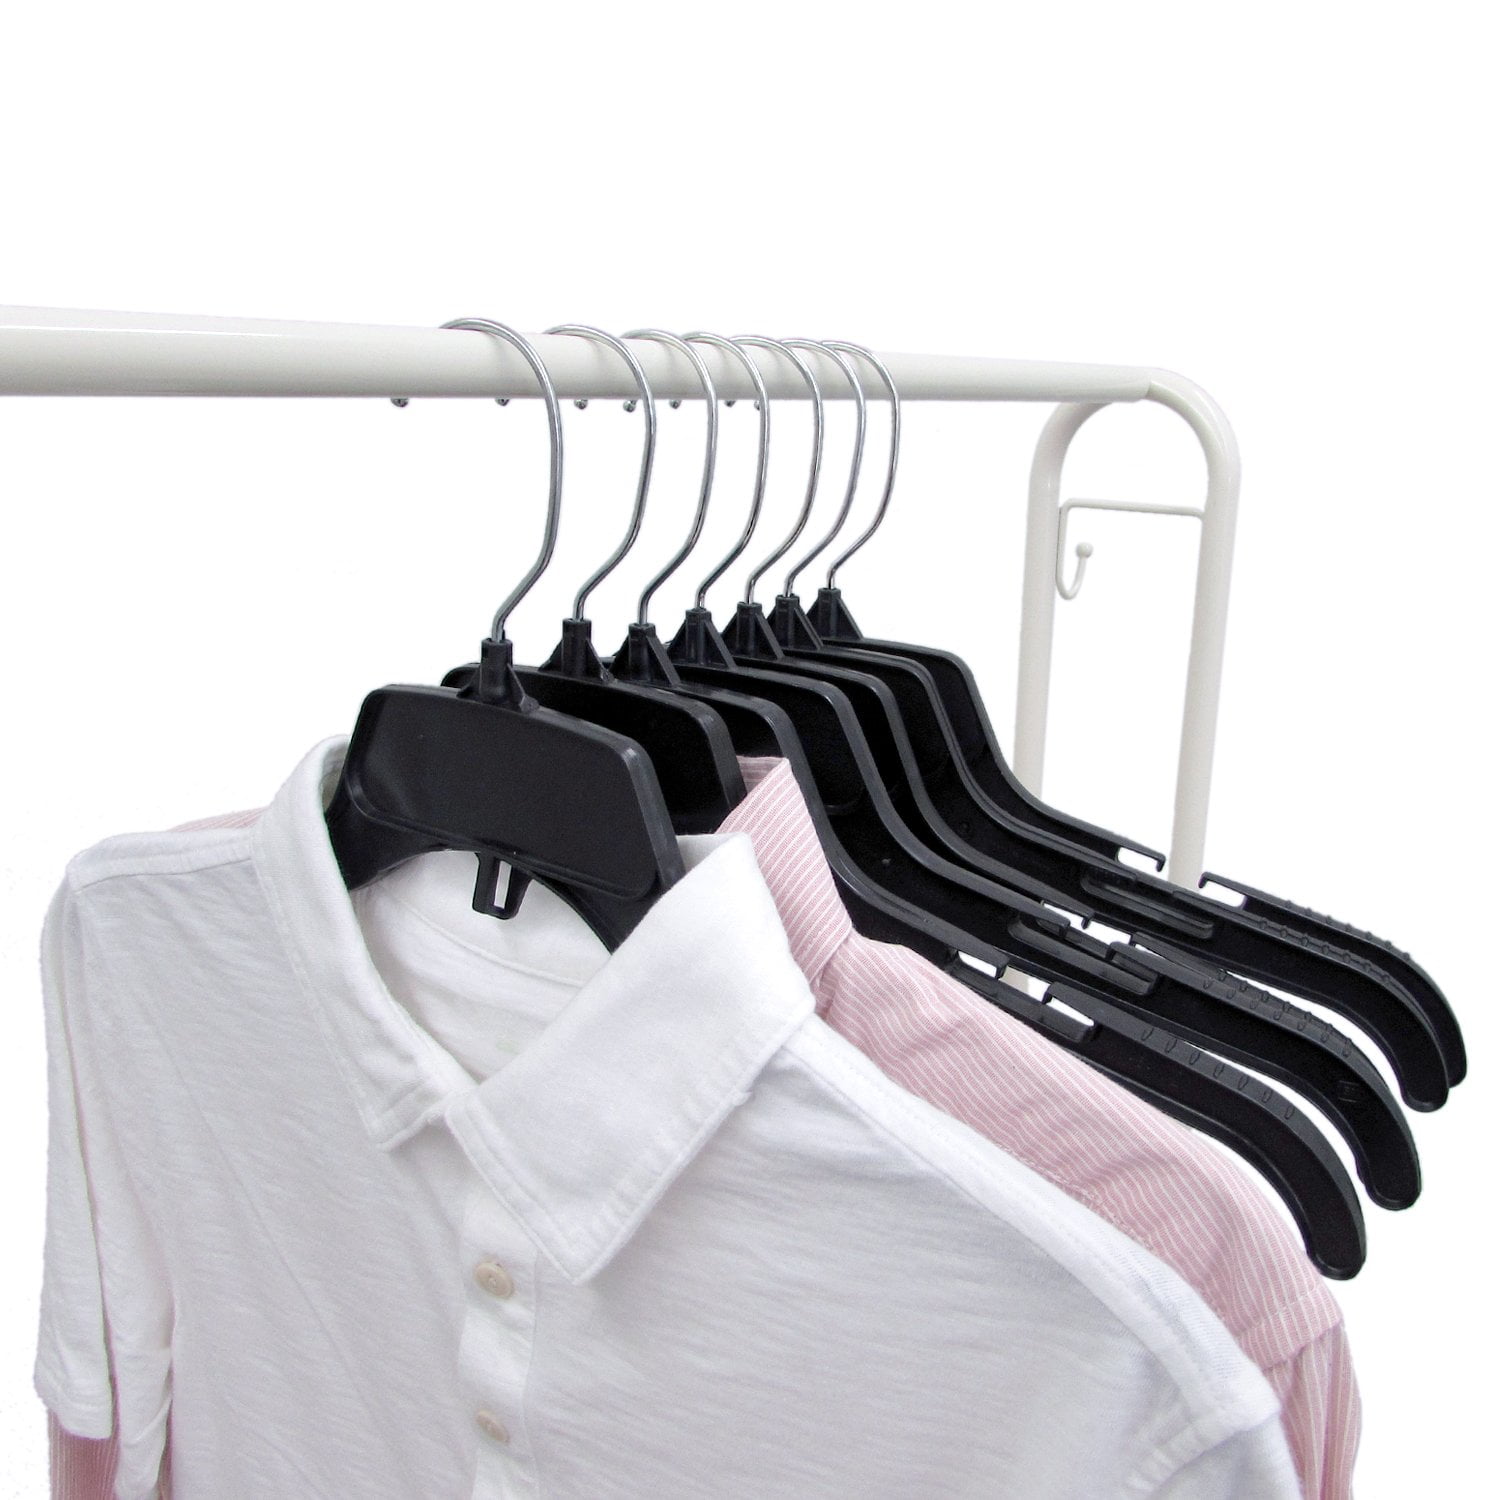 Hanger Central Space-Saving, Durable Black Plastic Clothes Hangers, Bulk, Non-Slip Surface 360° Swivel Hook, Perfect for T-Shirts, Oversize Garments